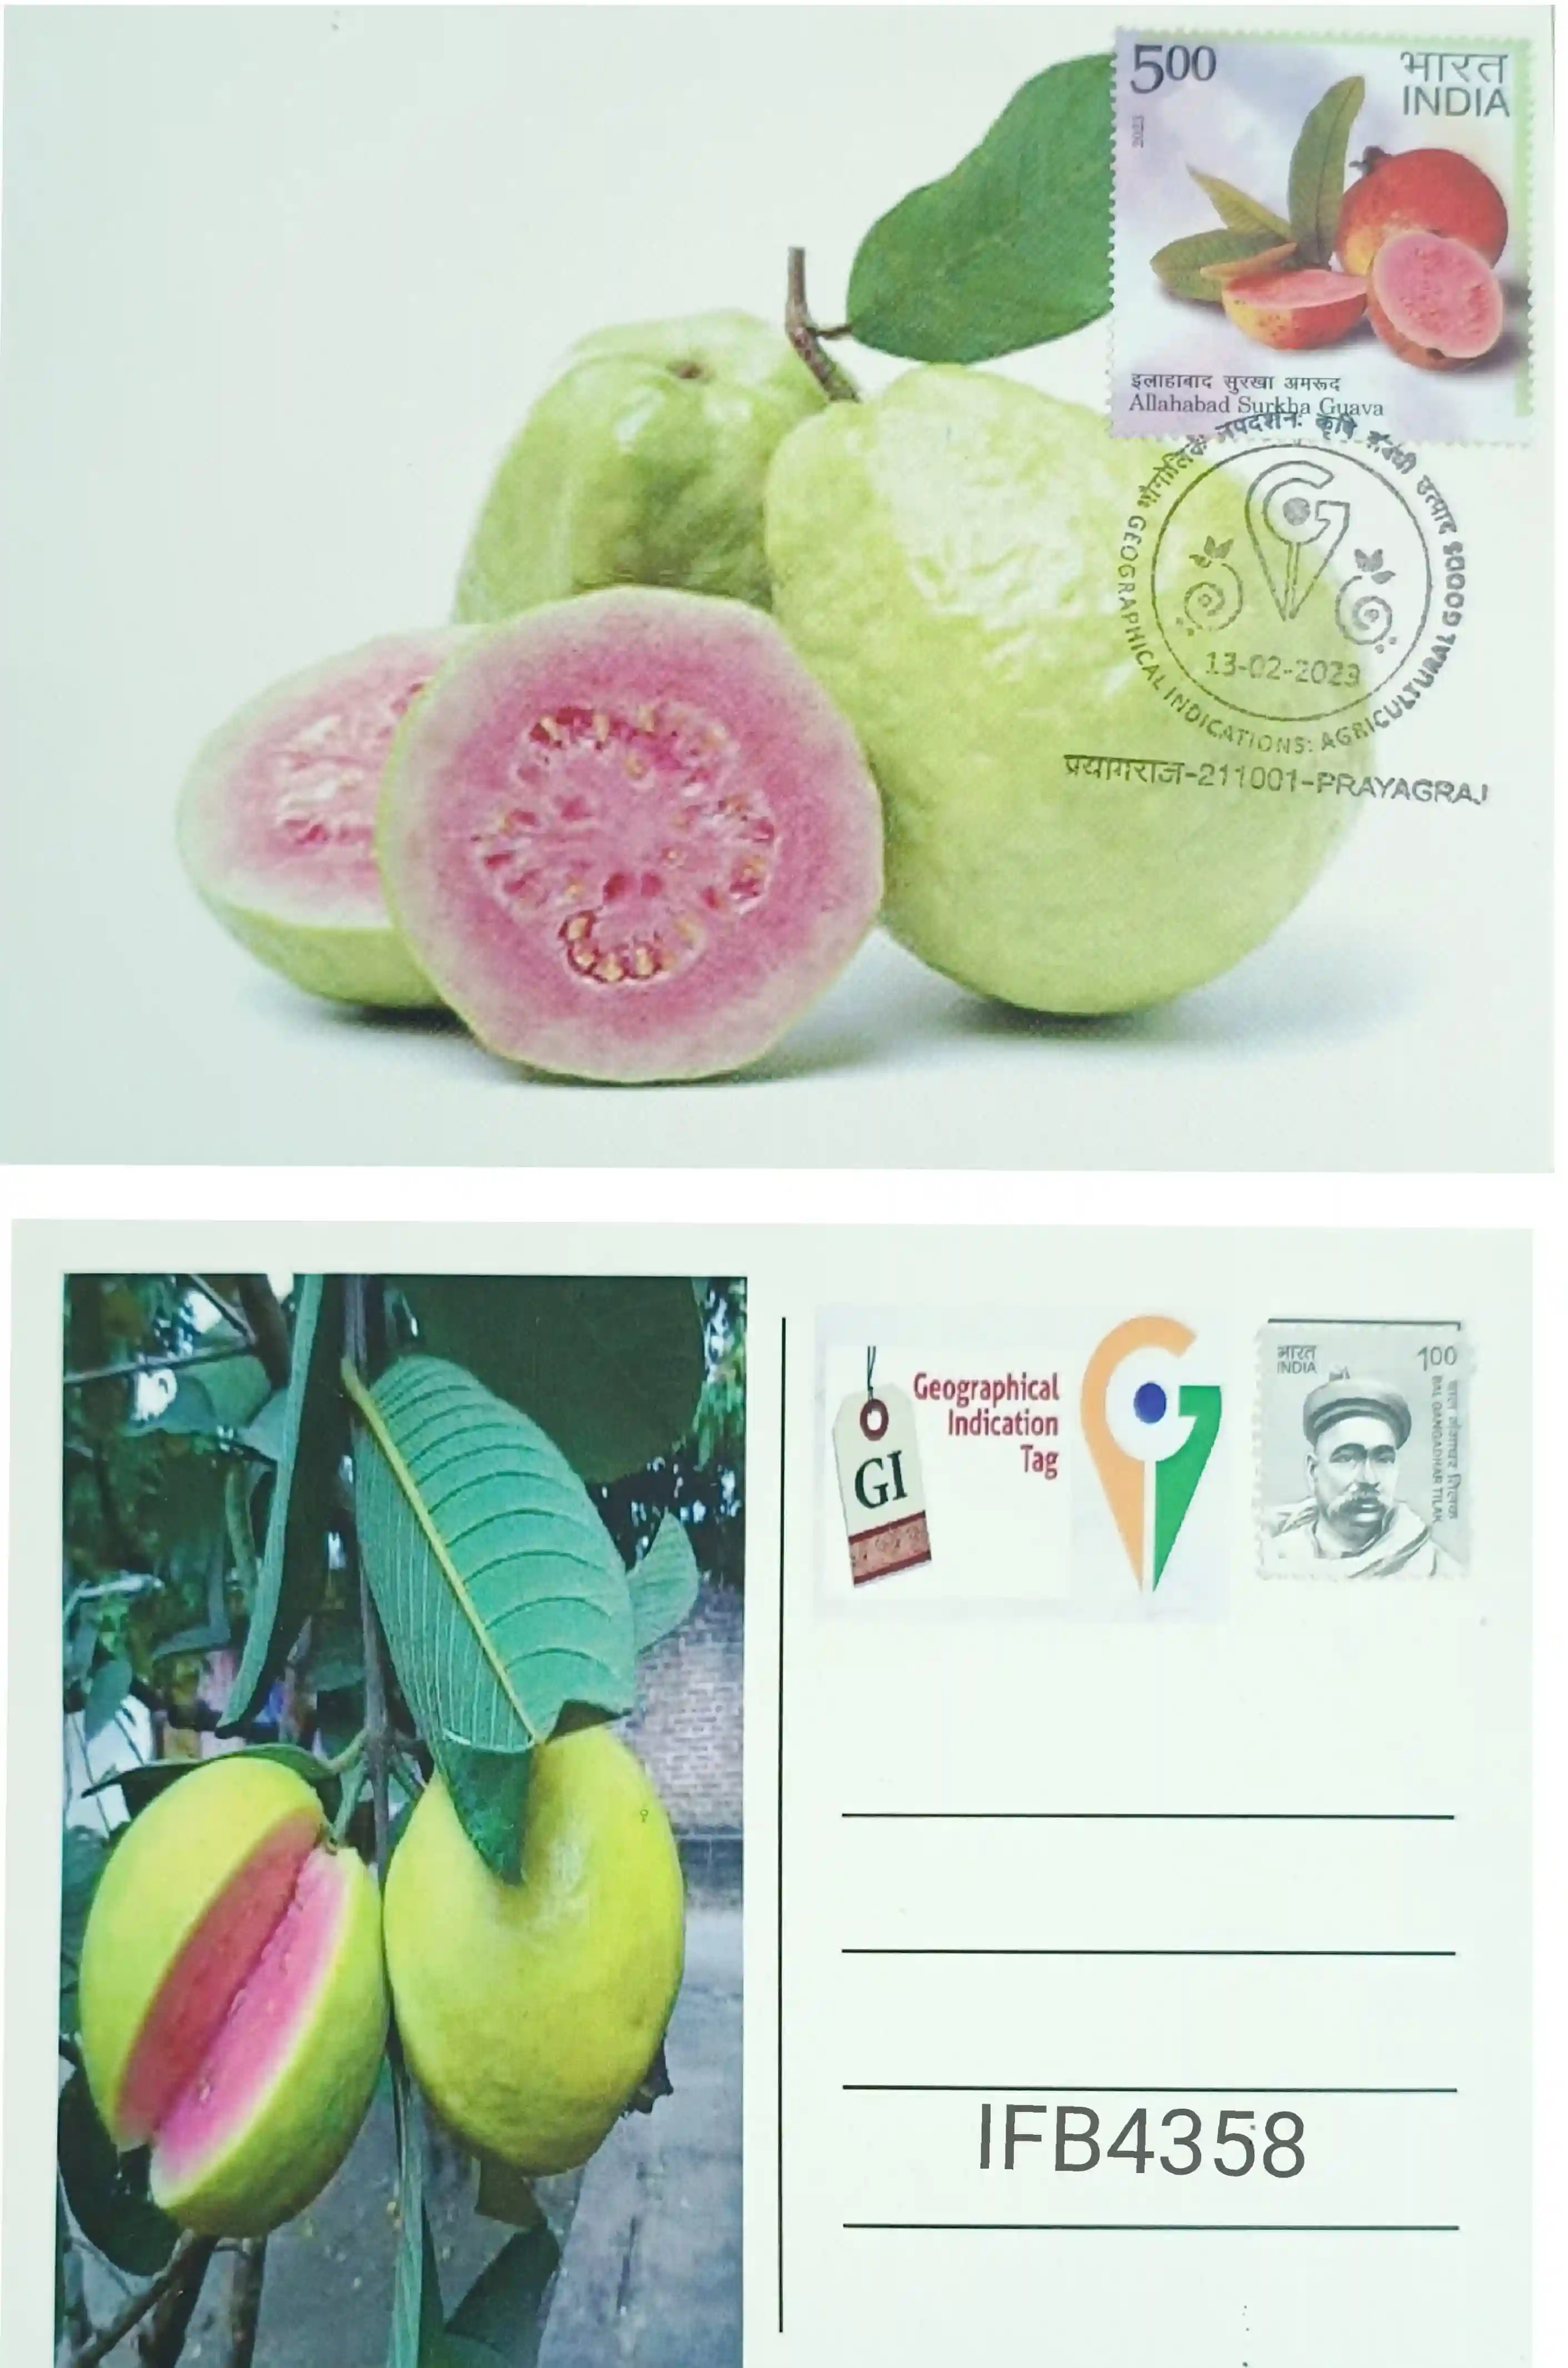 India 2023 Geographical Indication Tag Allahabad Surkha Guava Picture Postcard Prayagraj Cancelled IFB04358